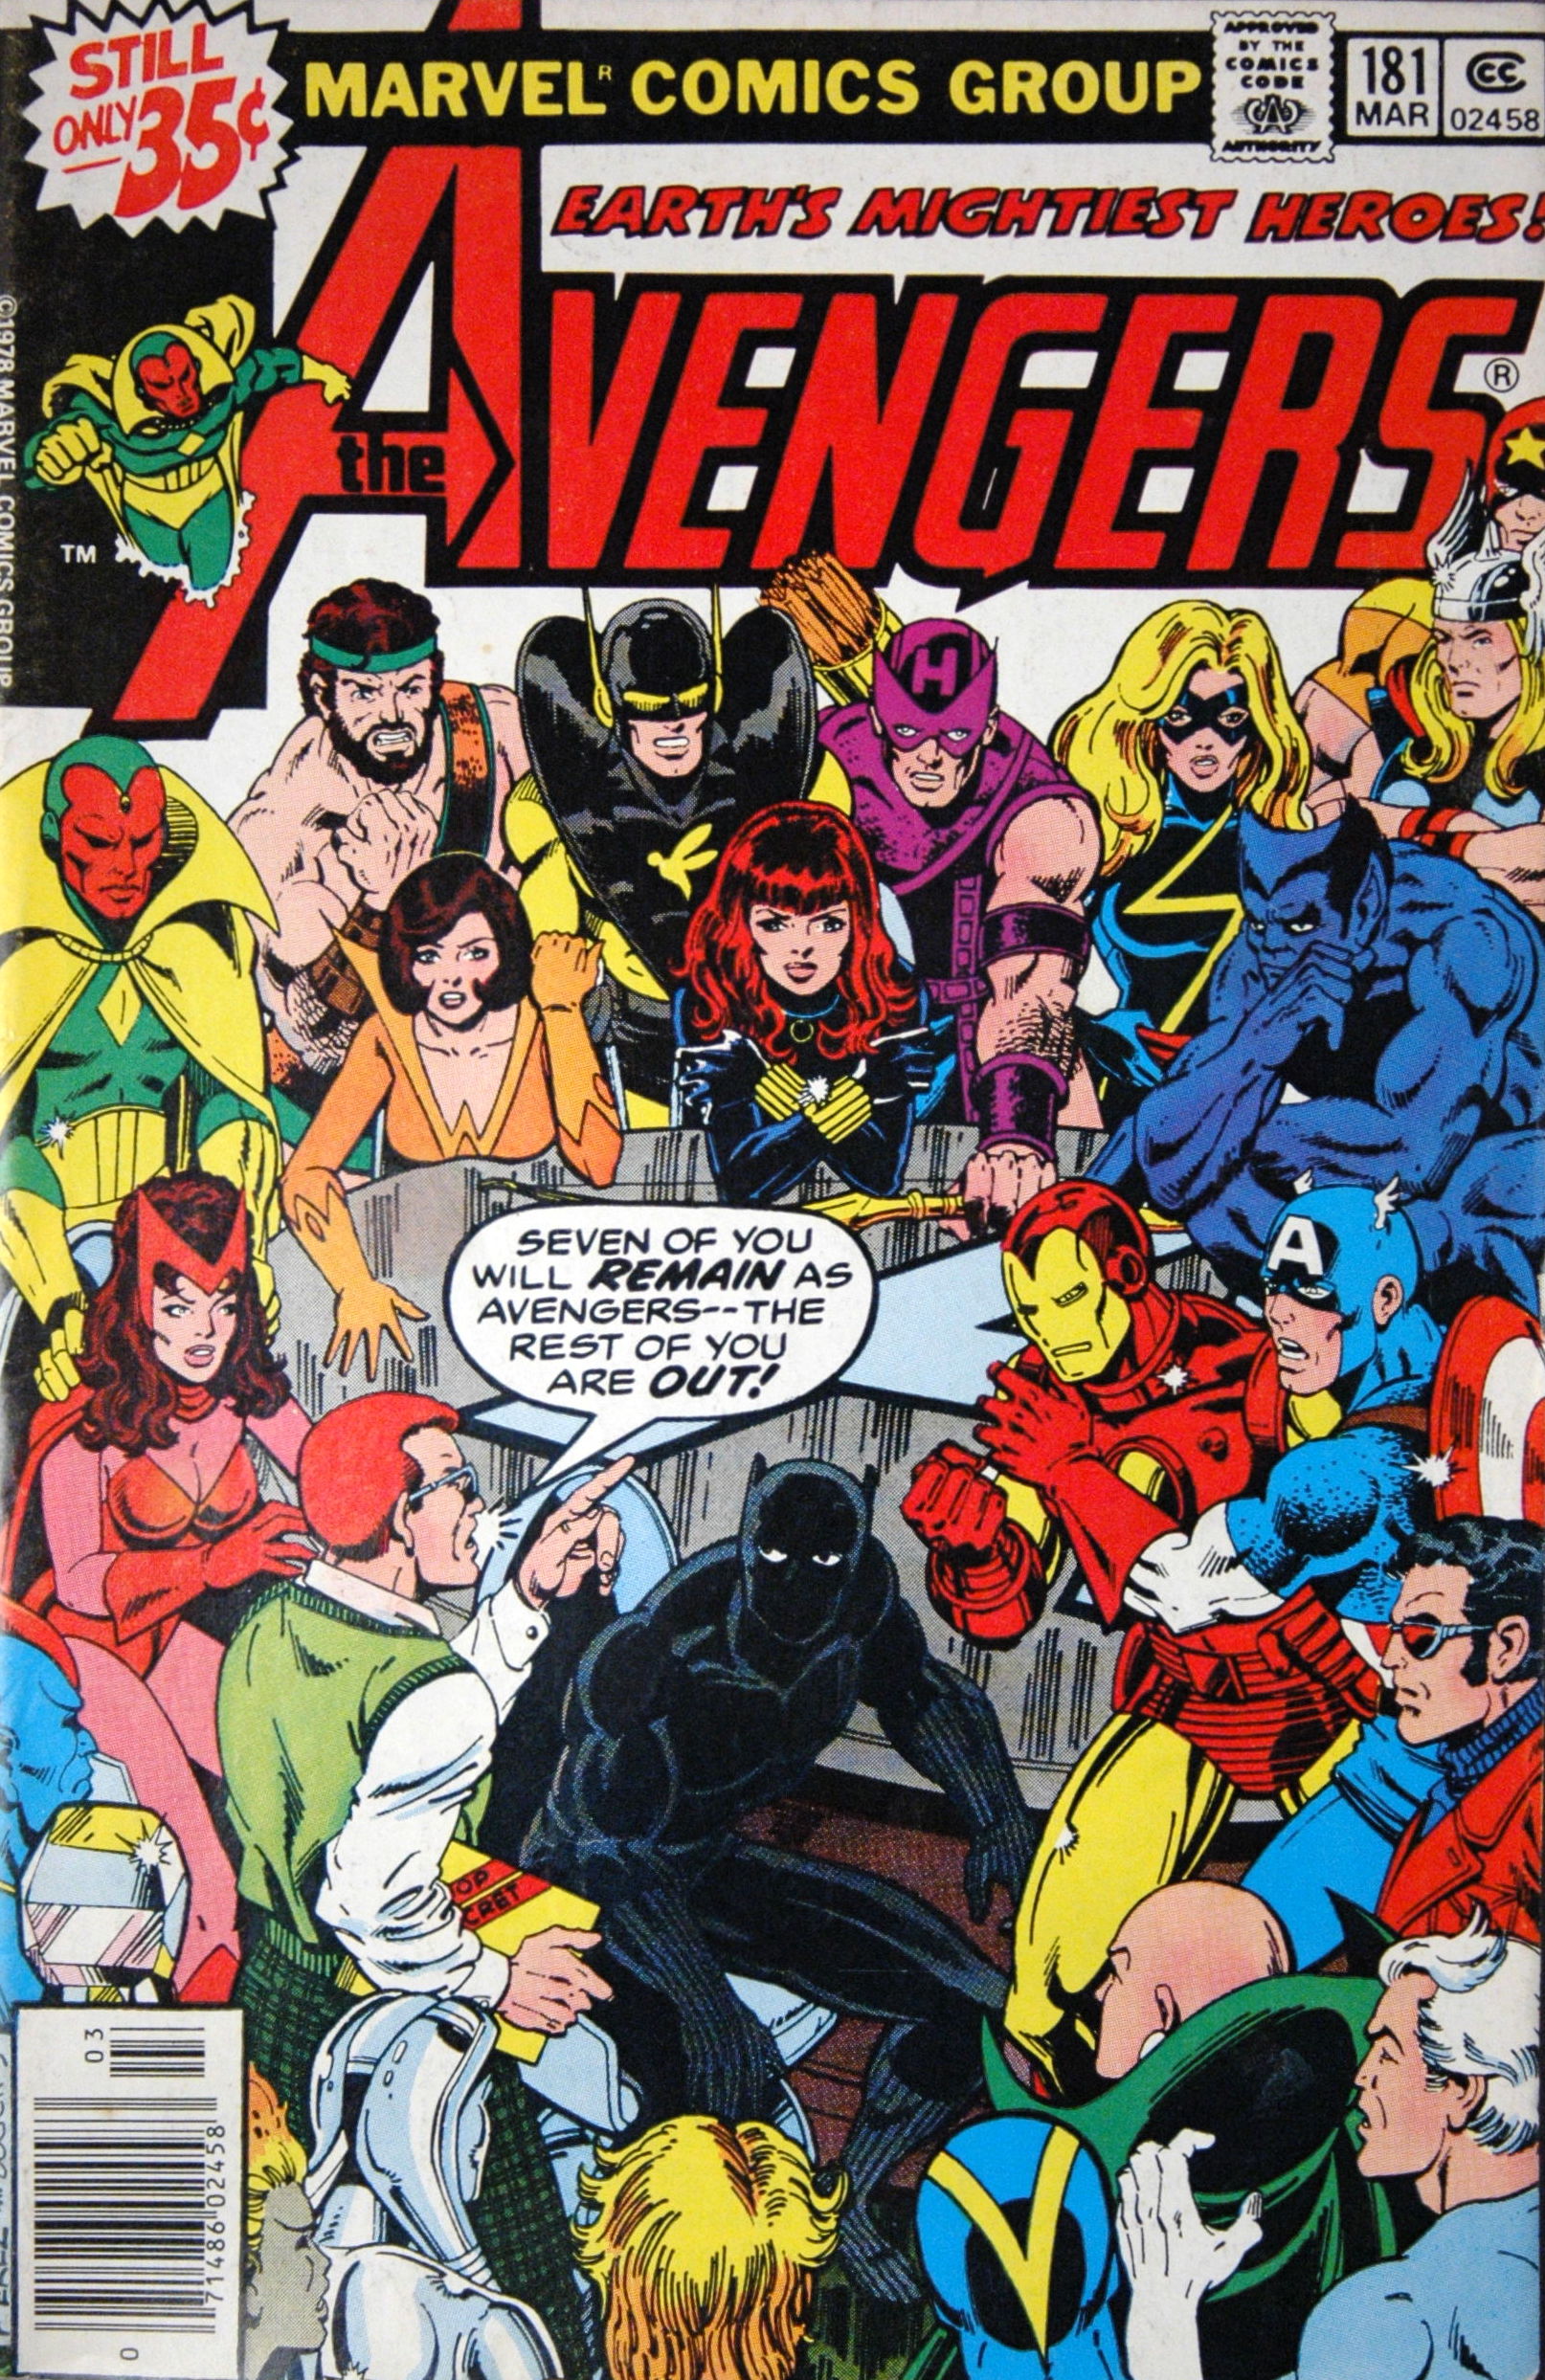 The Avengers Vol. 1 #181